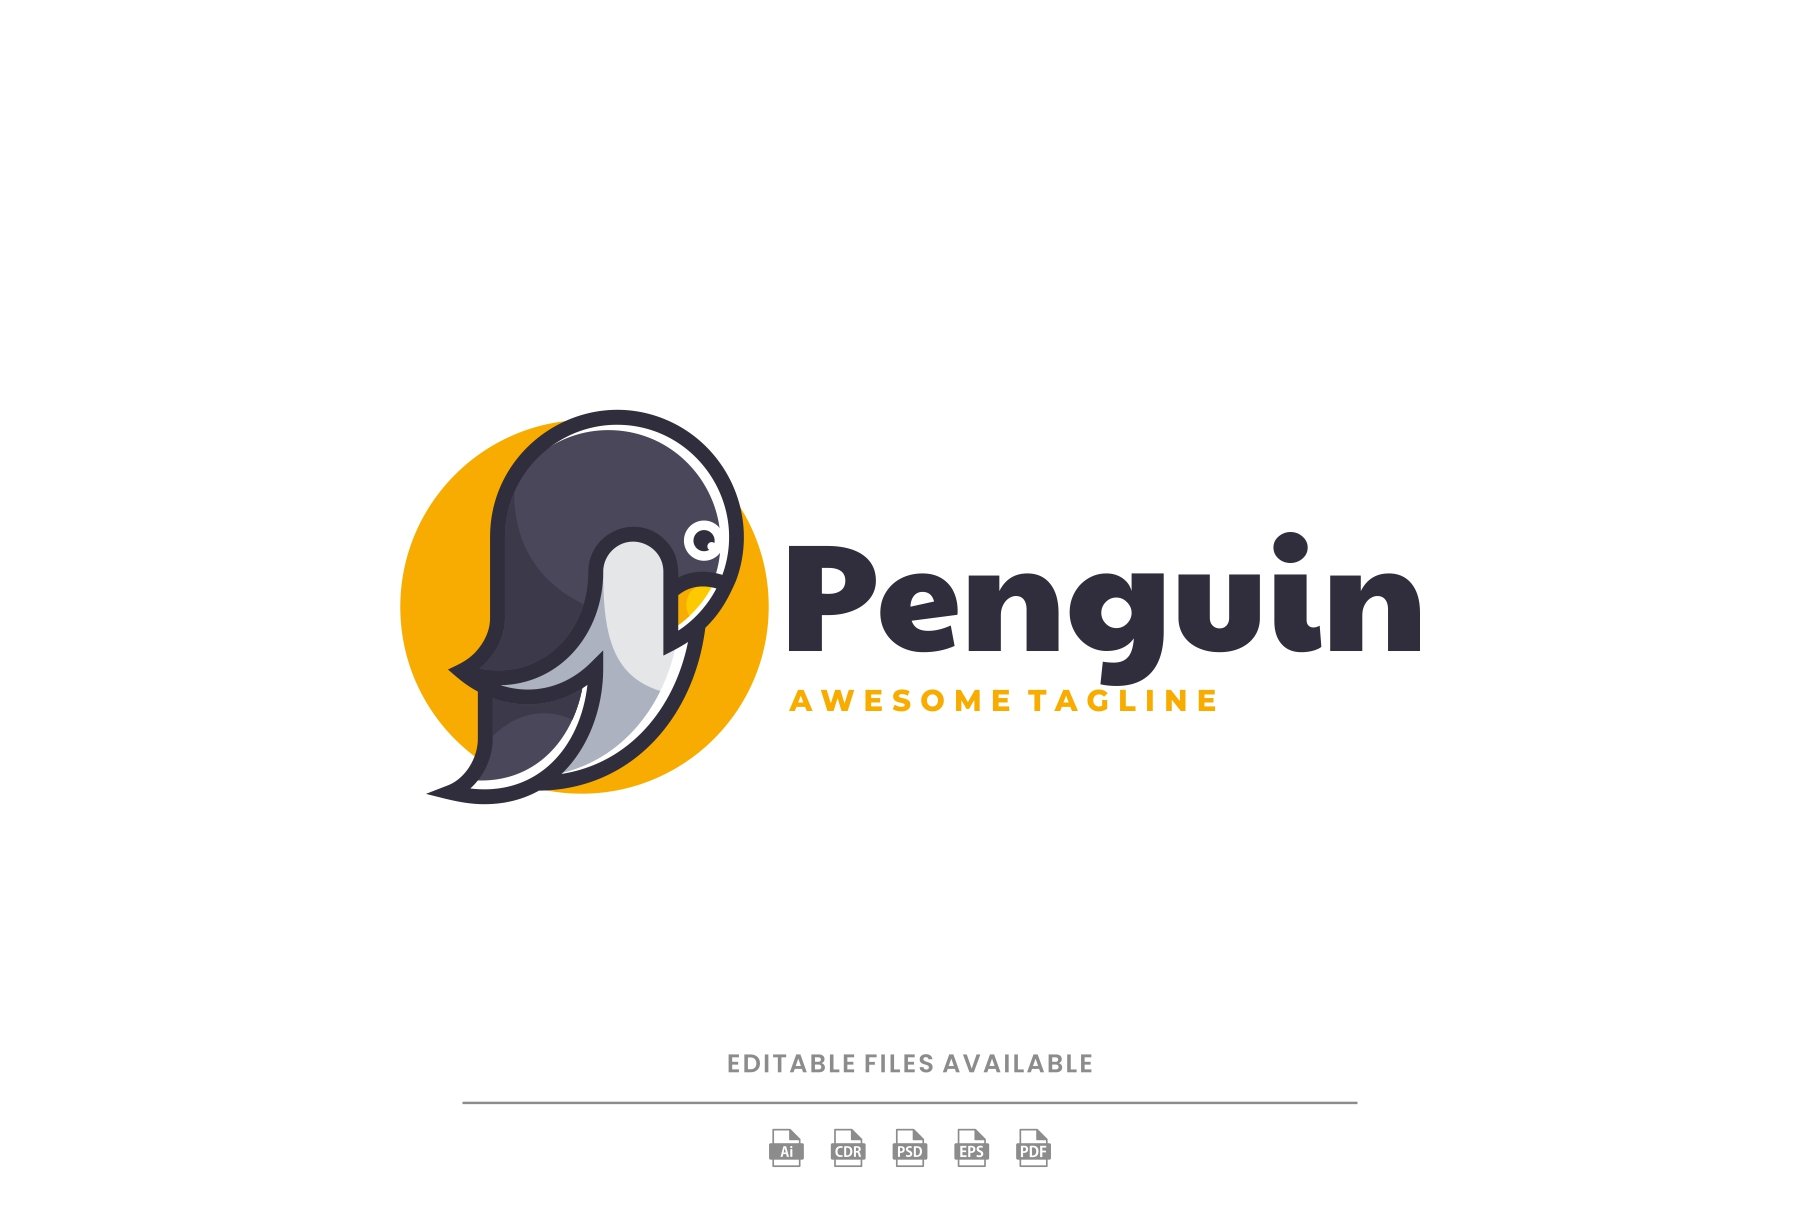 Penguin Simple Mascot Logo cover image.